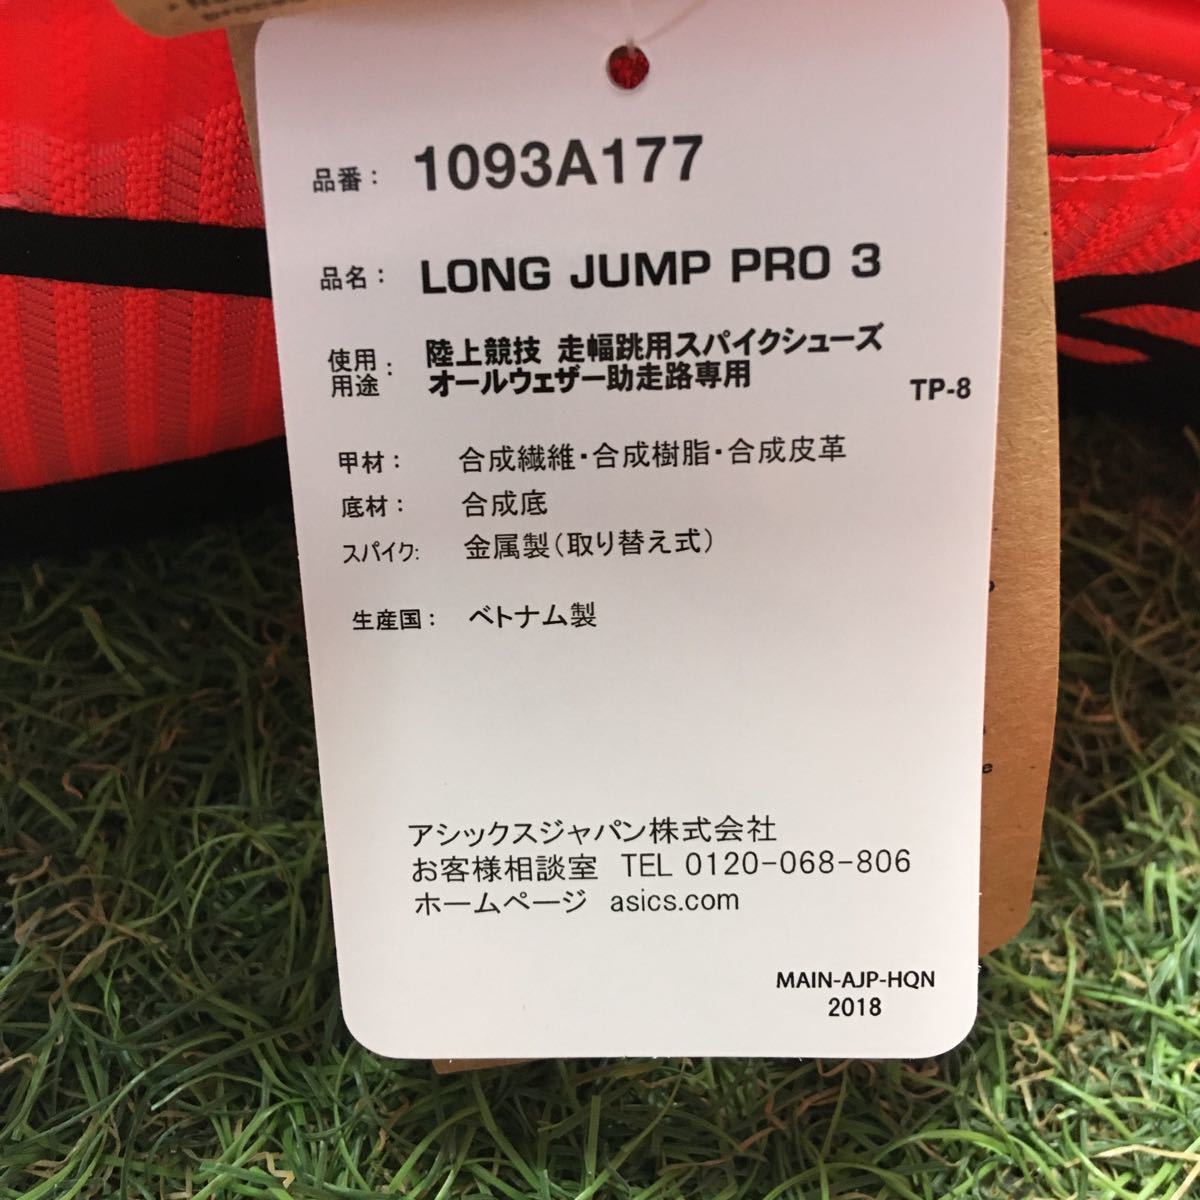 VI213 R asics アシックス LONG JUMP PRO 3 1093A177-701 28.5㎝ 陸上競技 走幅跳用 オールウェザー助走路専用 未使用 展示品 スパイク_画像6